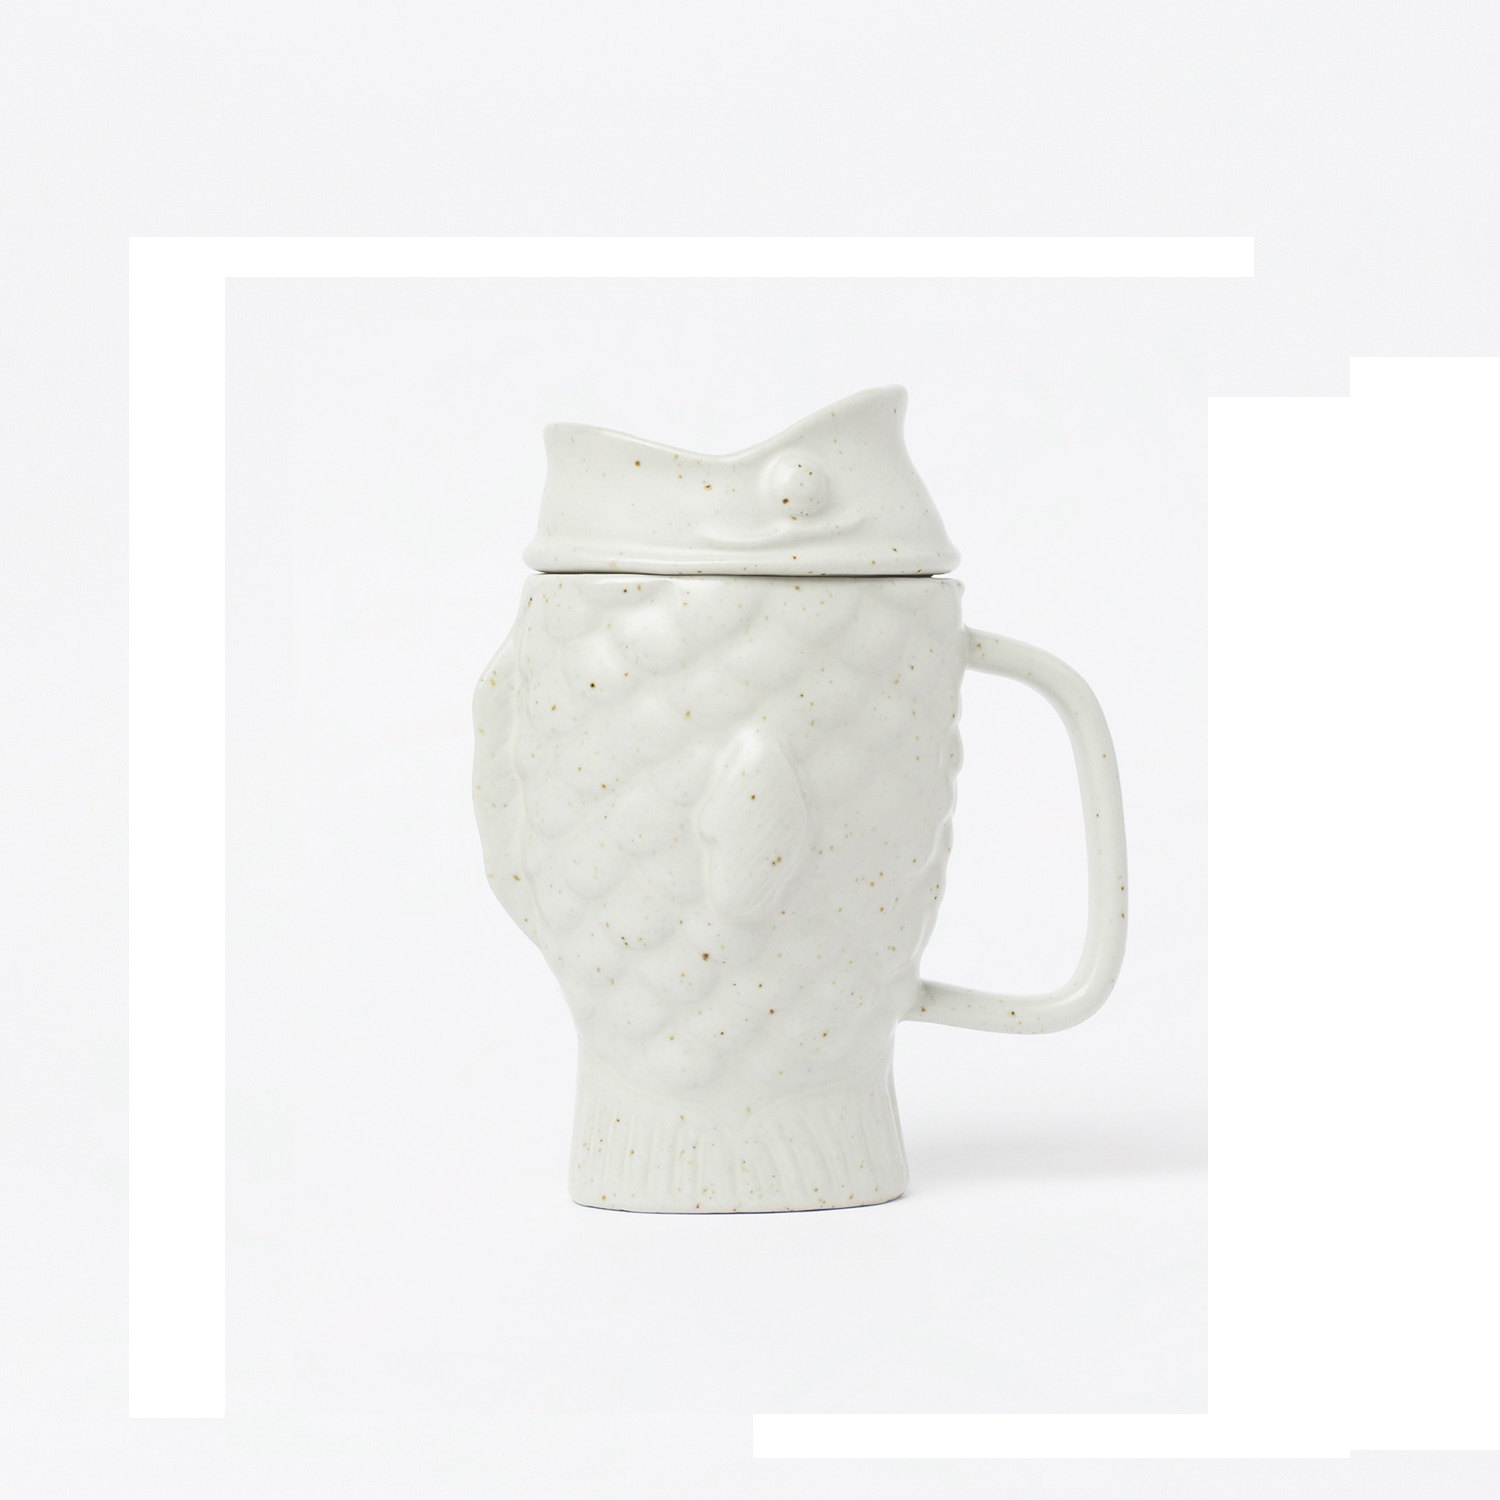 Taiyaki tea mug infuser cream